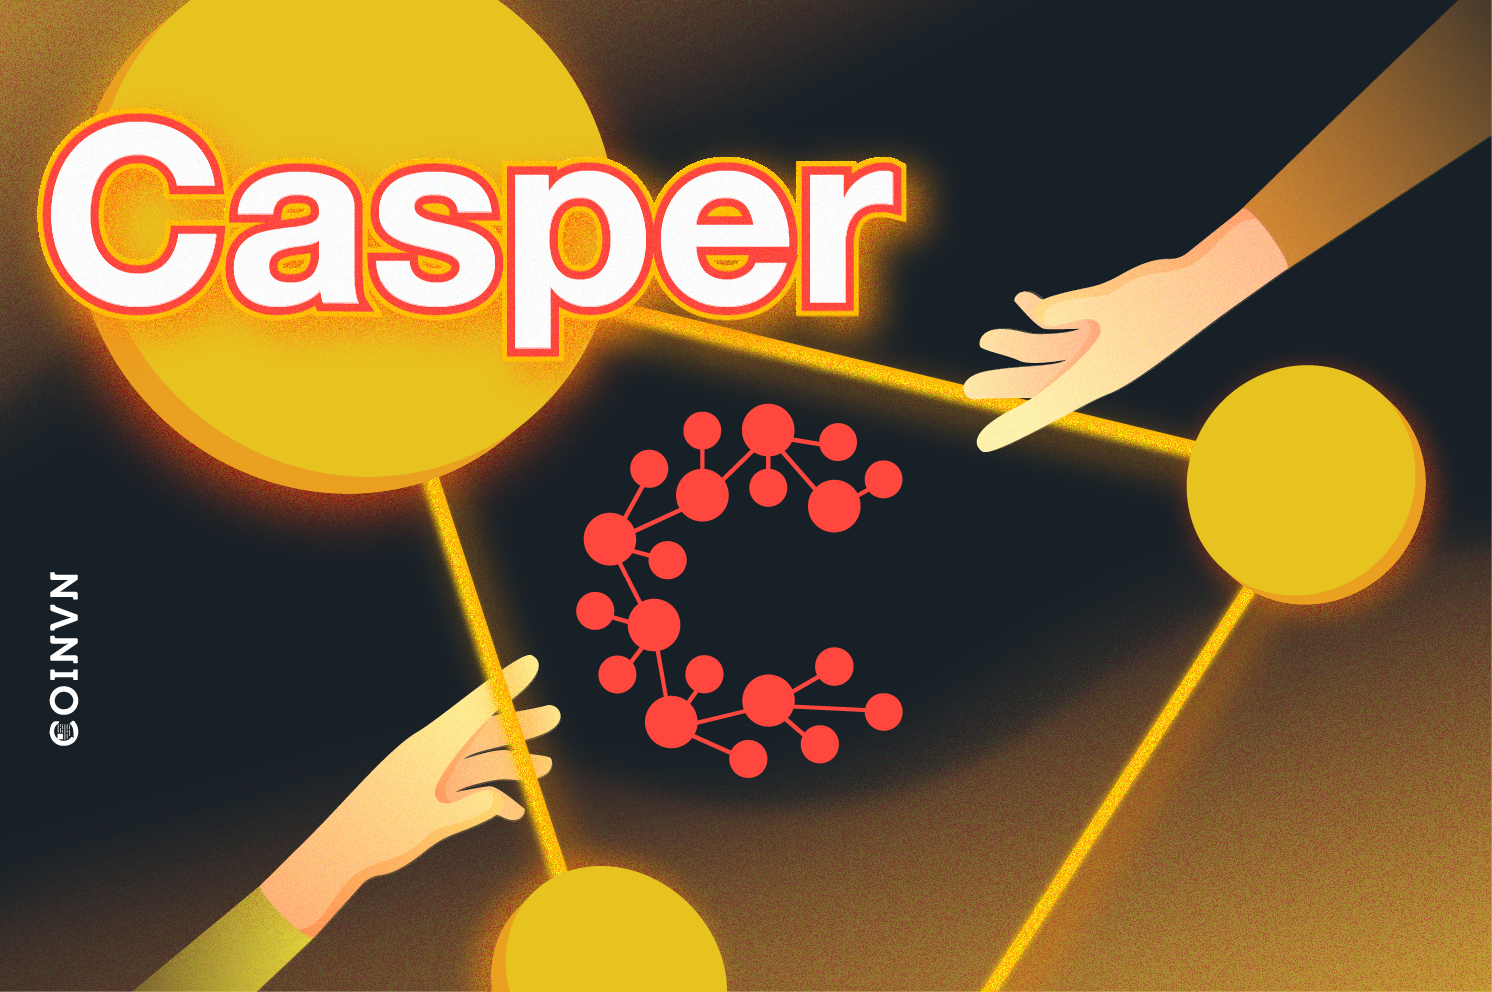 Casper Network la gi? Thong tin ve Casper Network va token CSPR - anh 1